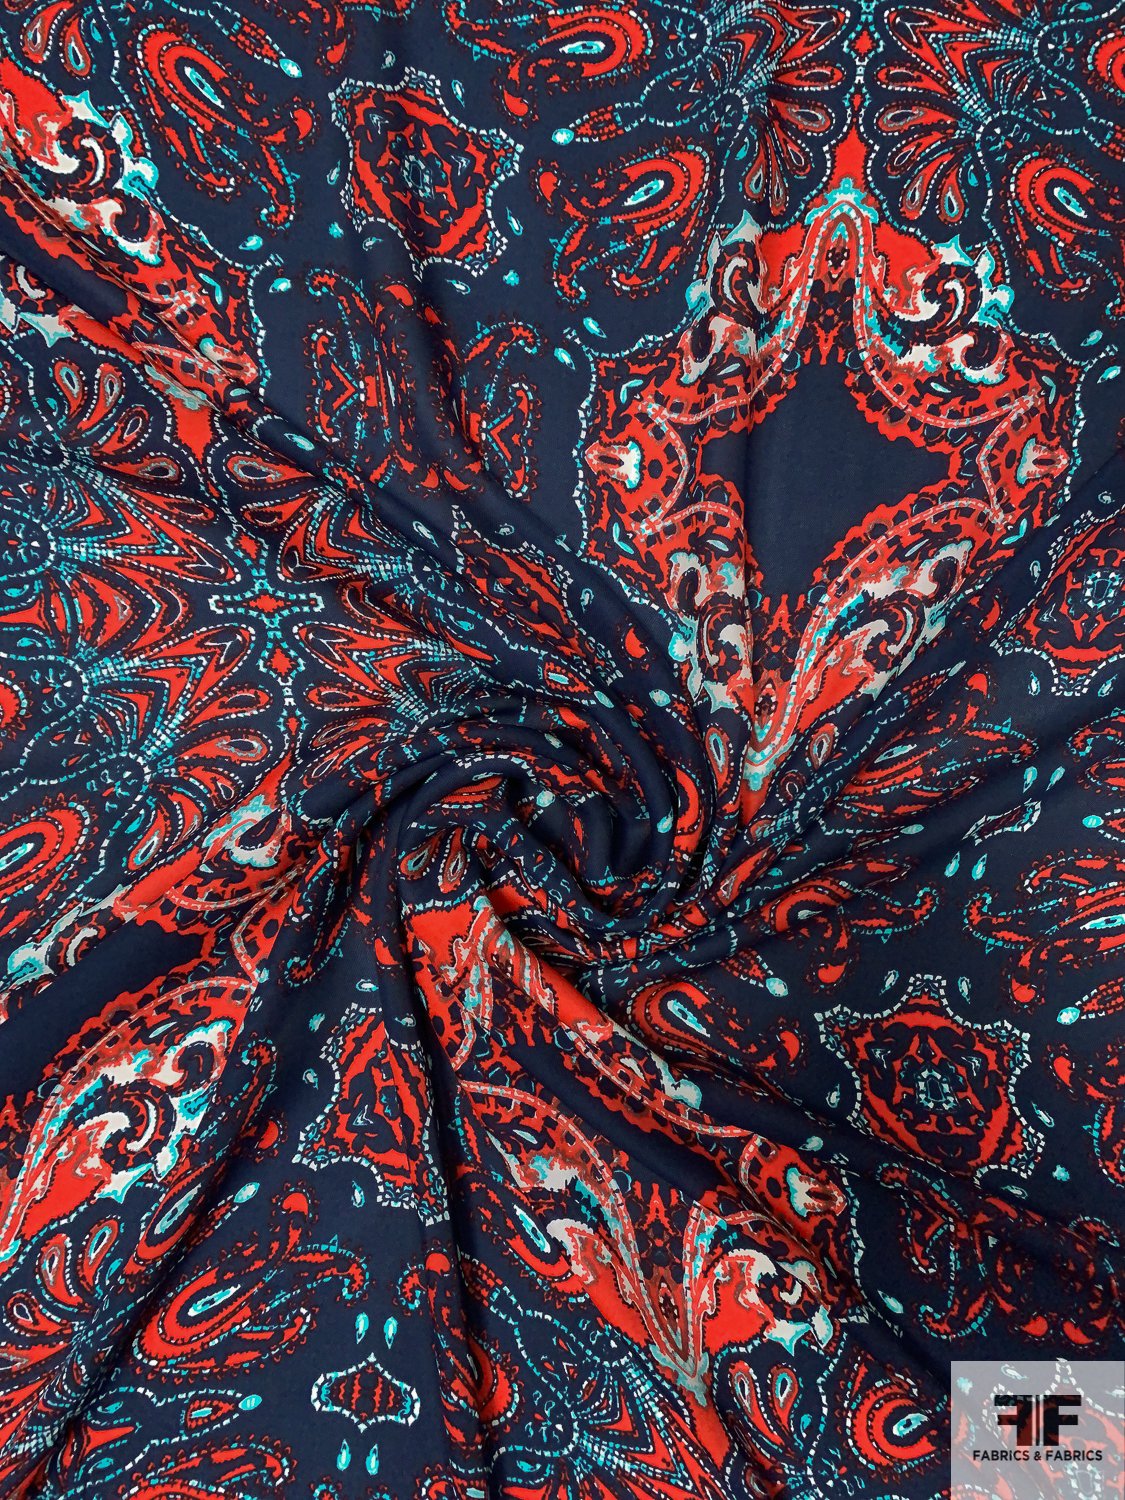 Ornate Paisley-Like Printed Silk Georgette - Navy / Red / Sky Blue / White